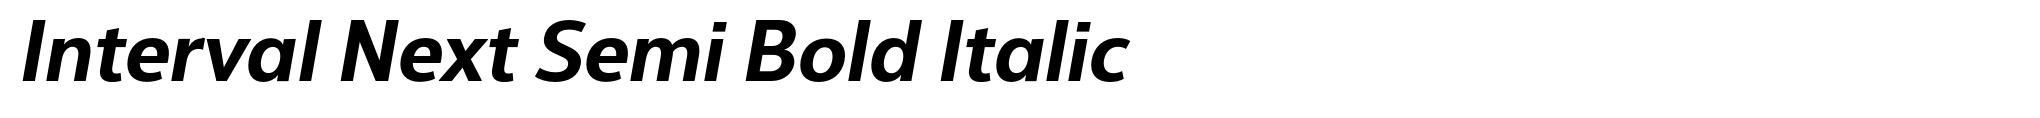 Interval Next Semi Bold Italic image